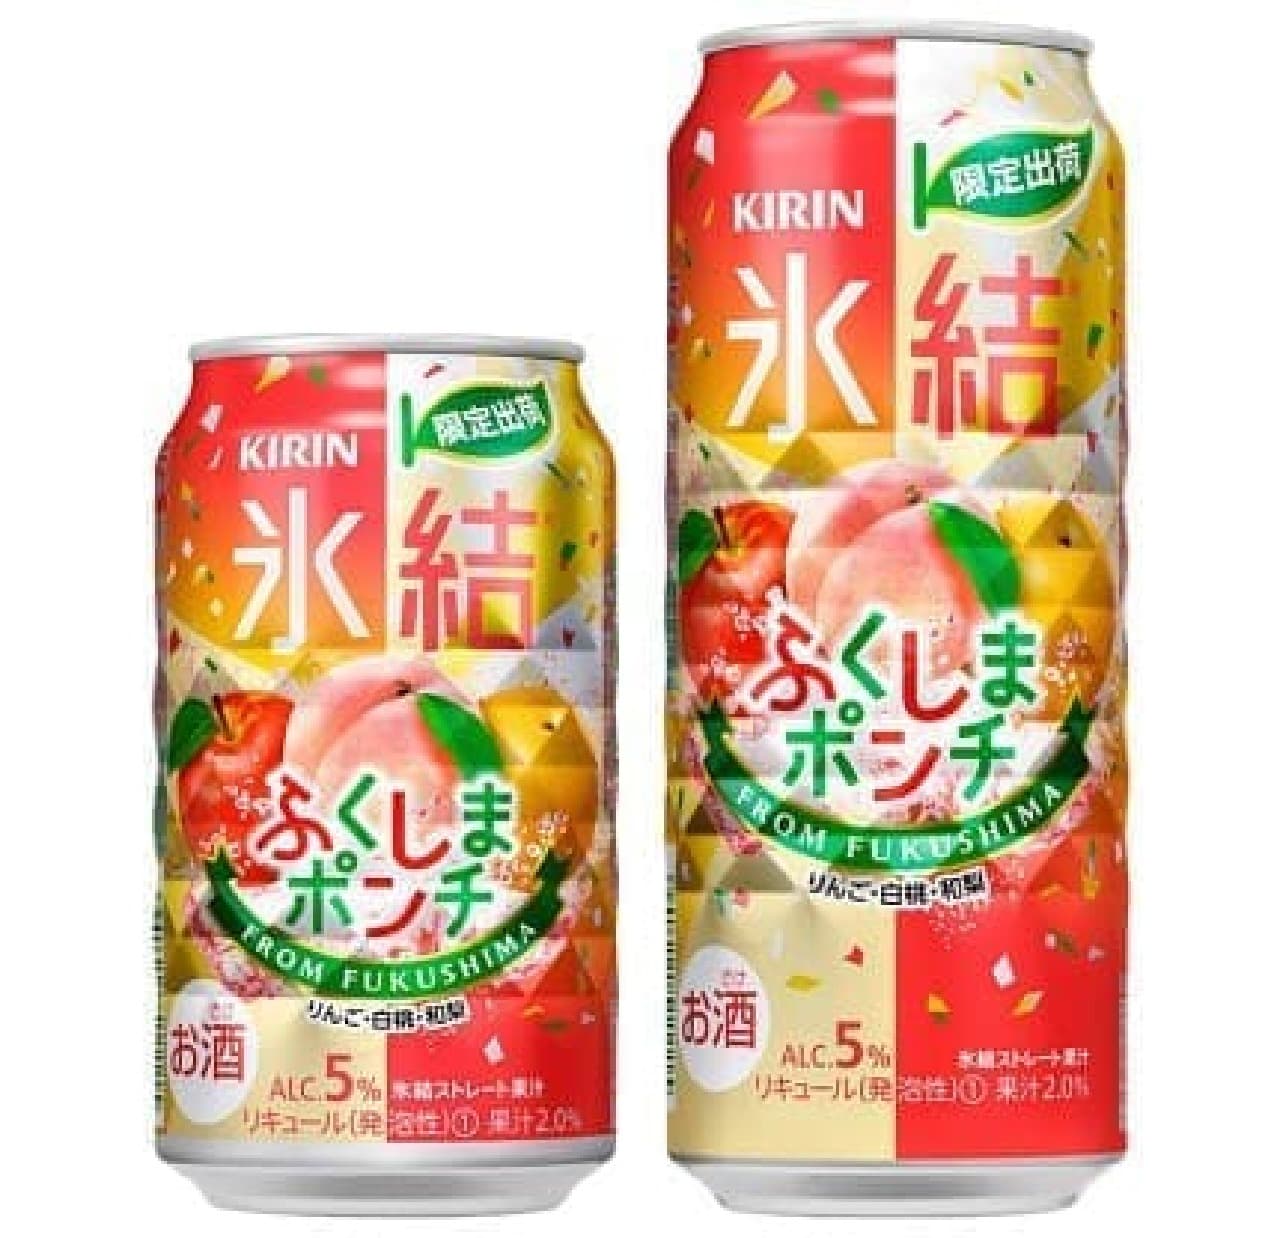 Kirin Freeze Fukushima Punch (Limited Shipment)